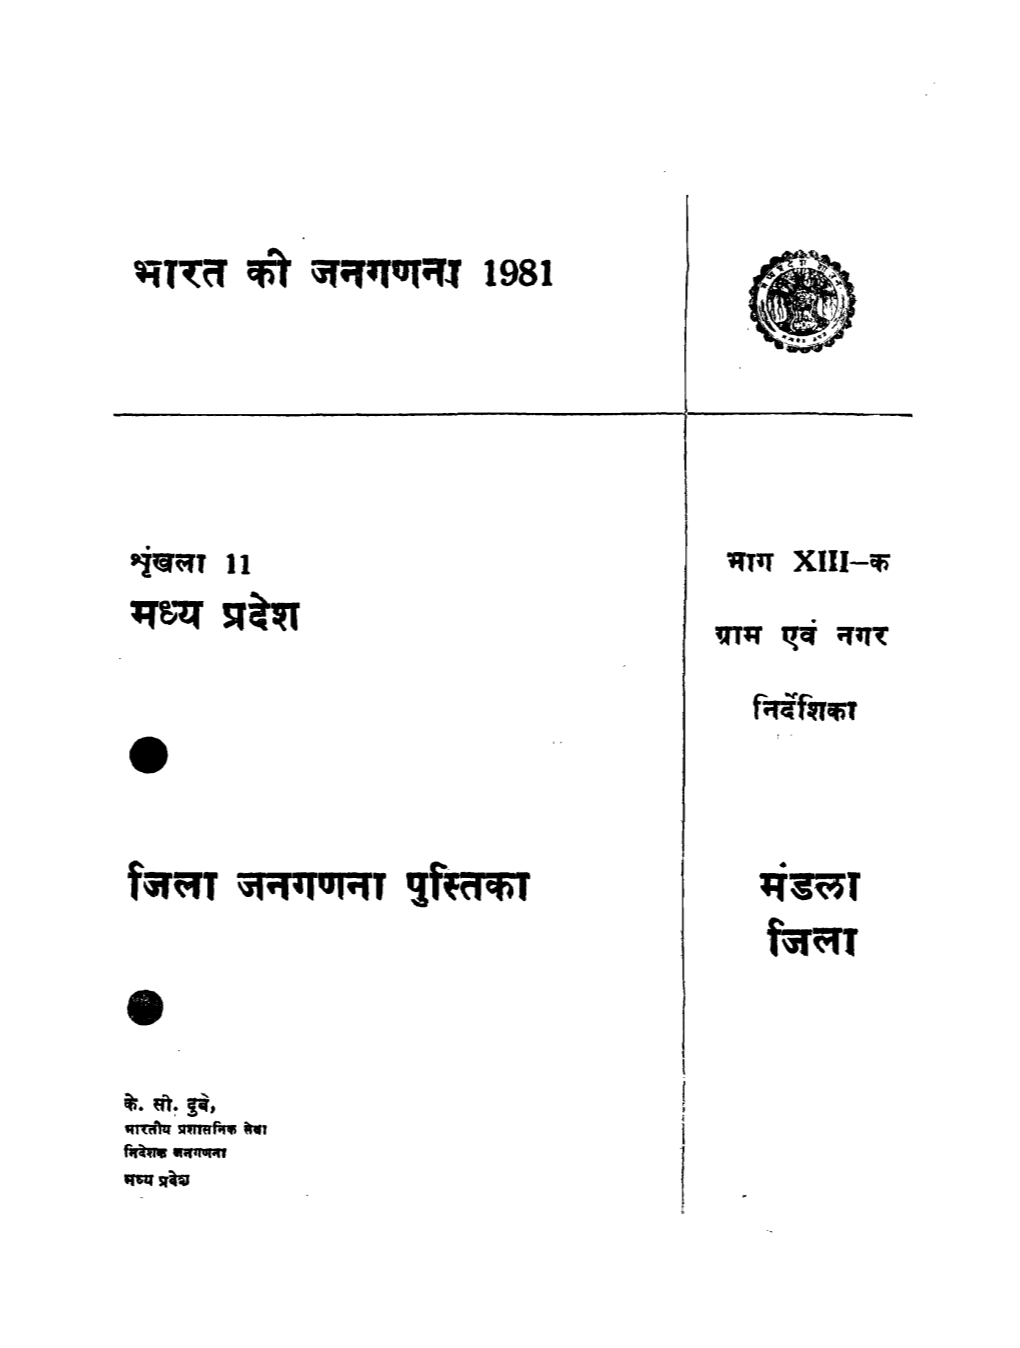 District Census Handbook, Mandla, Part XIII-A, Series-11